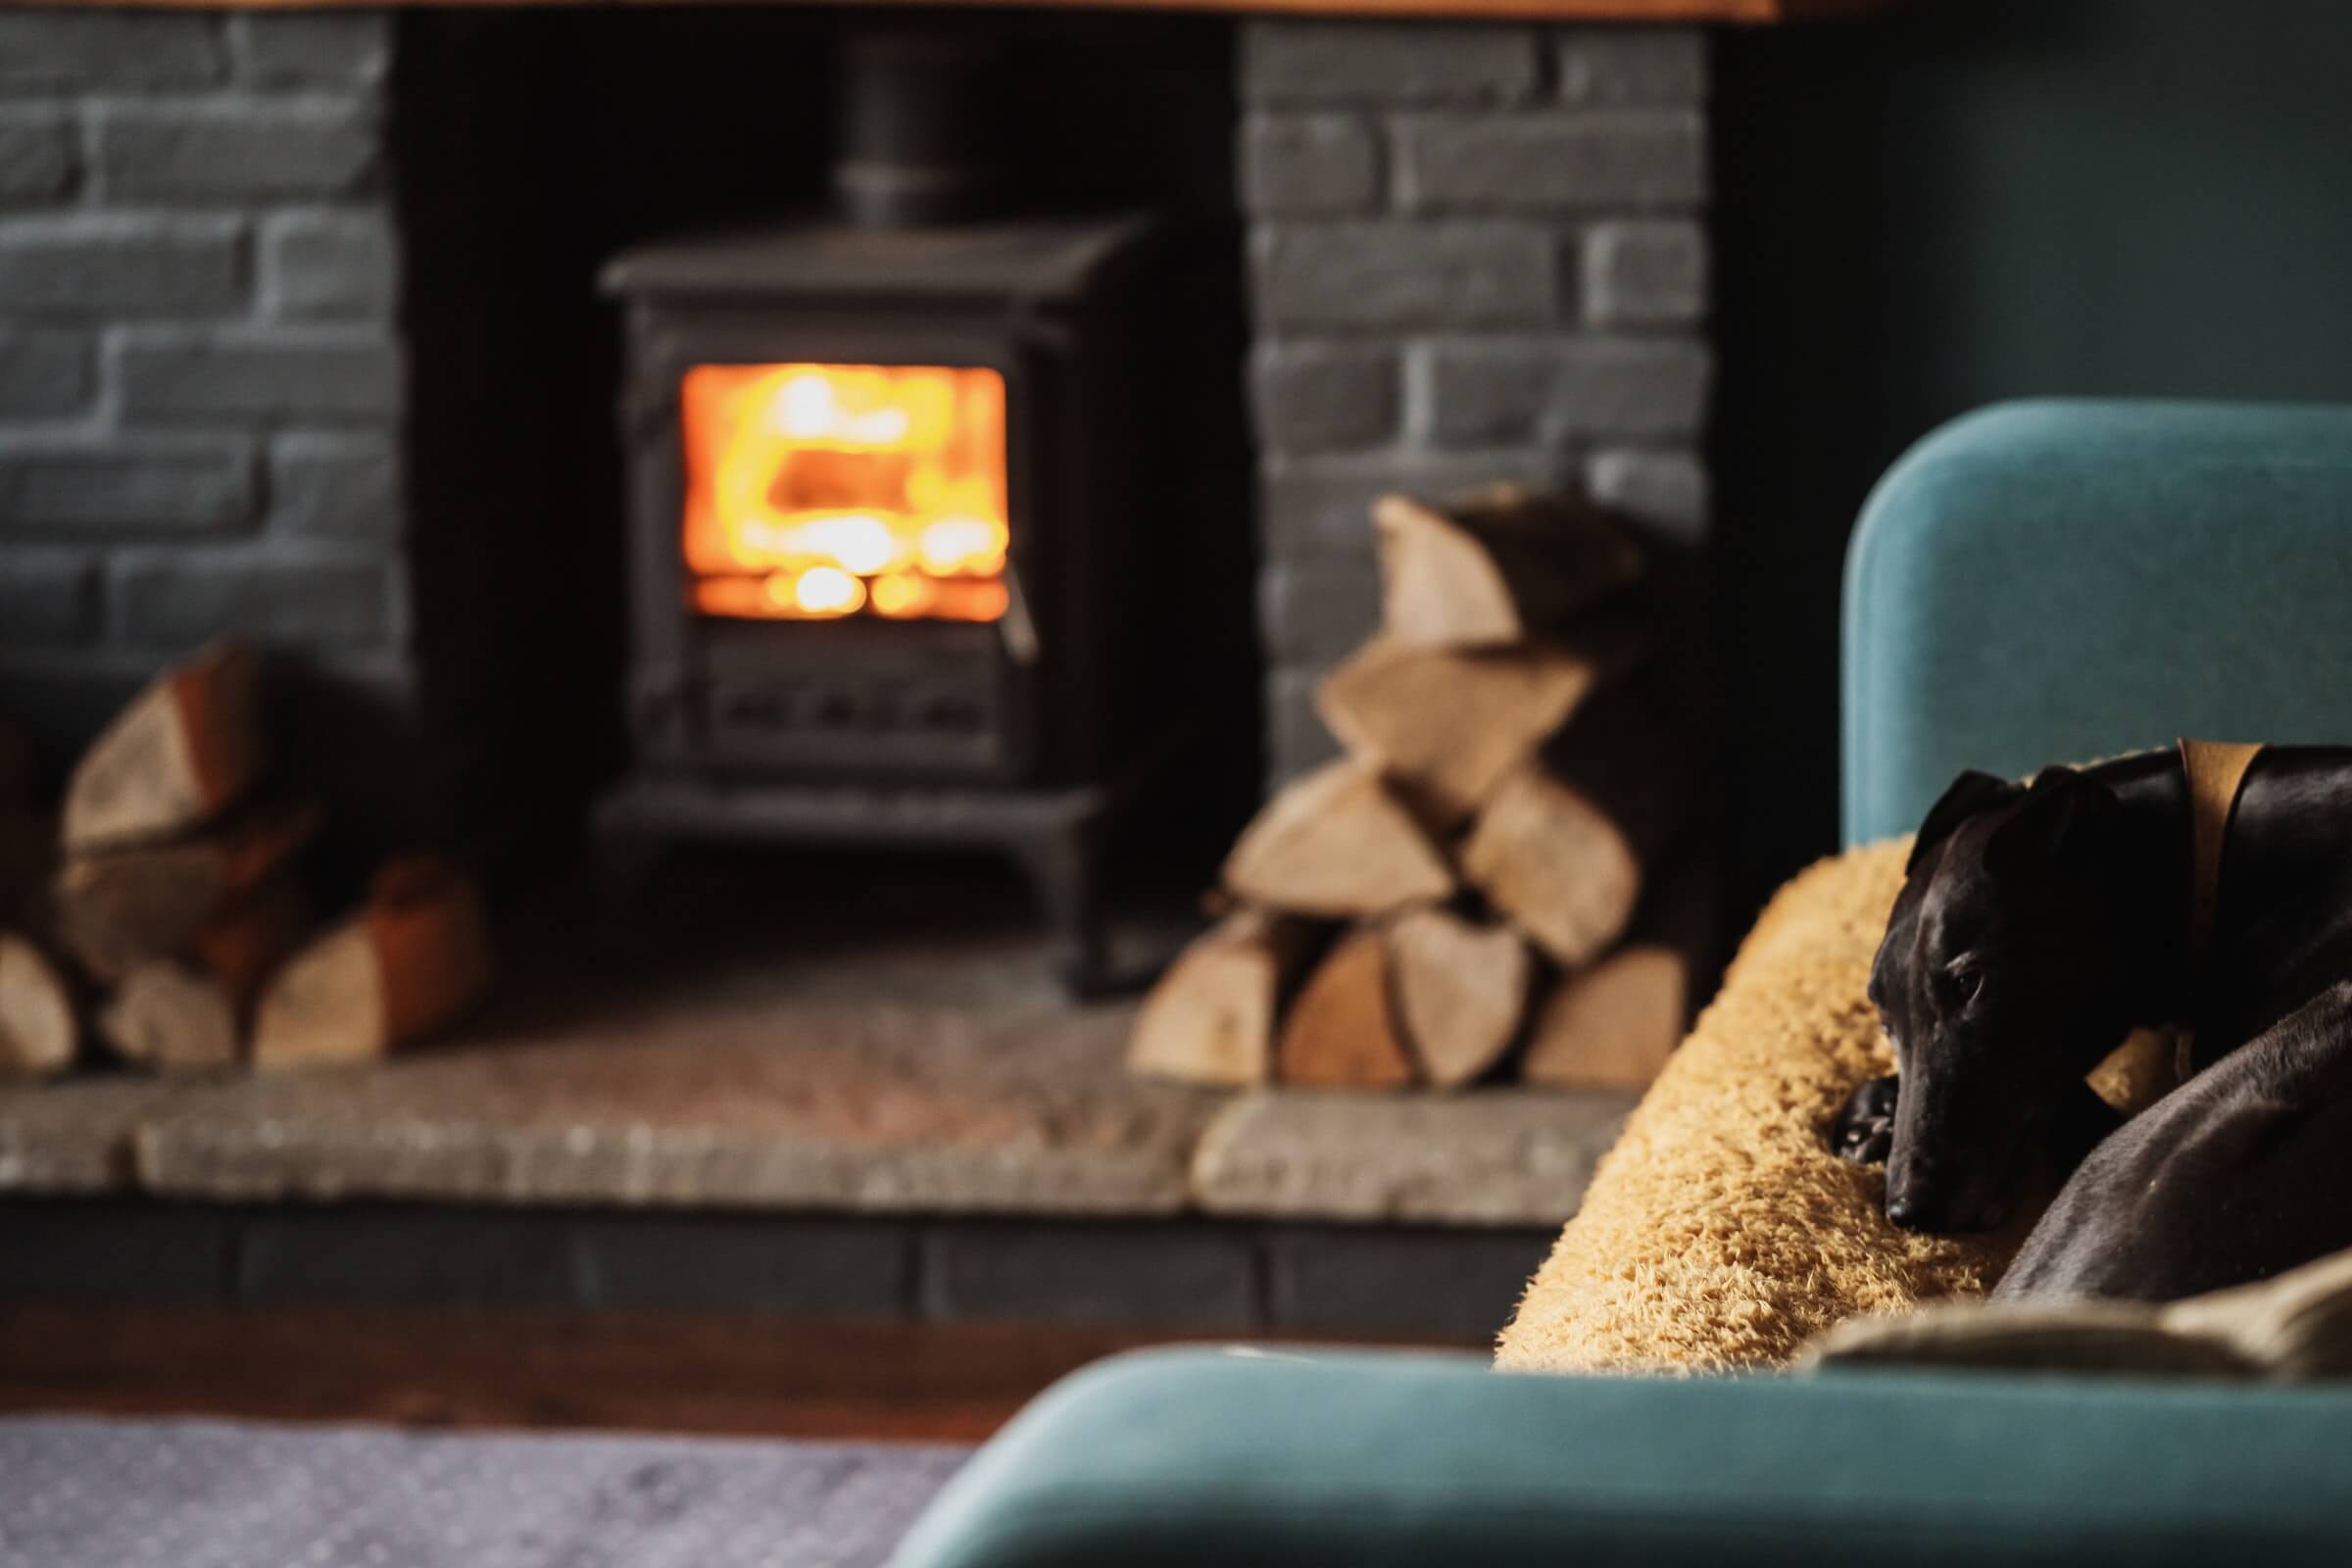 Fireplace with dog sleeping